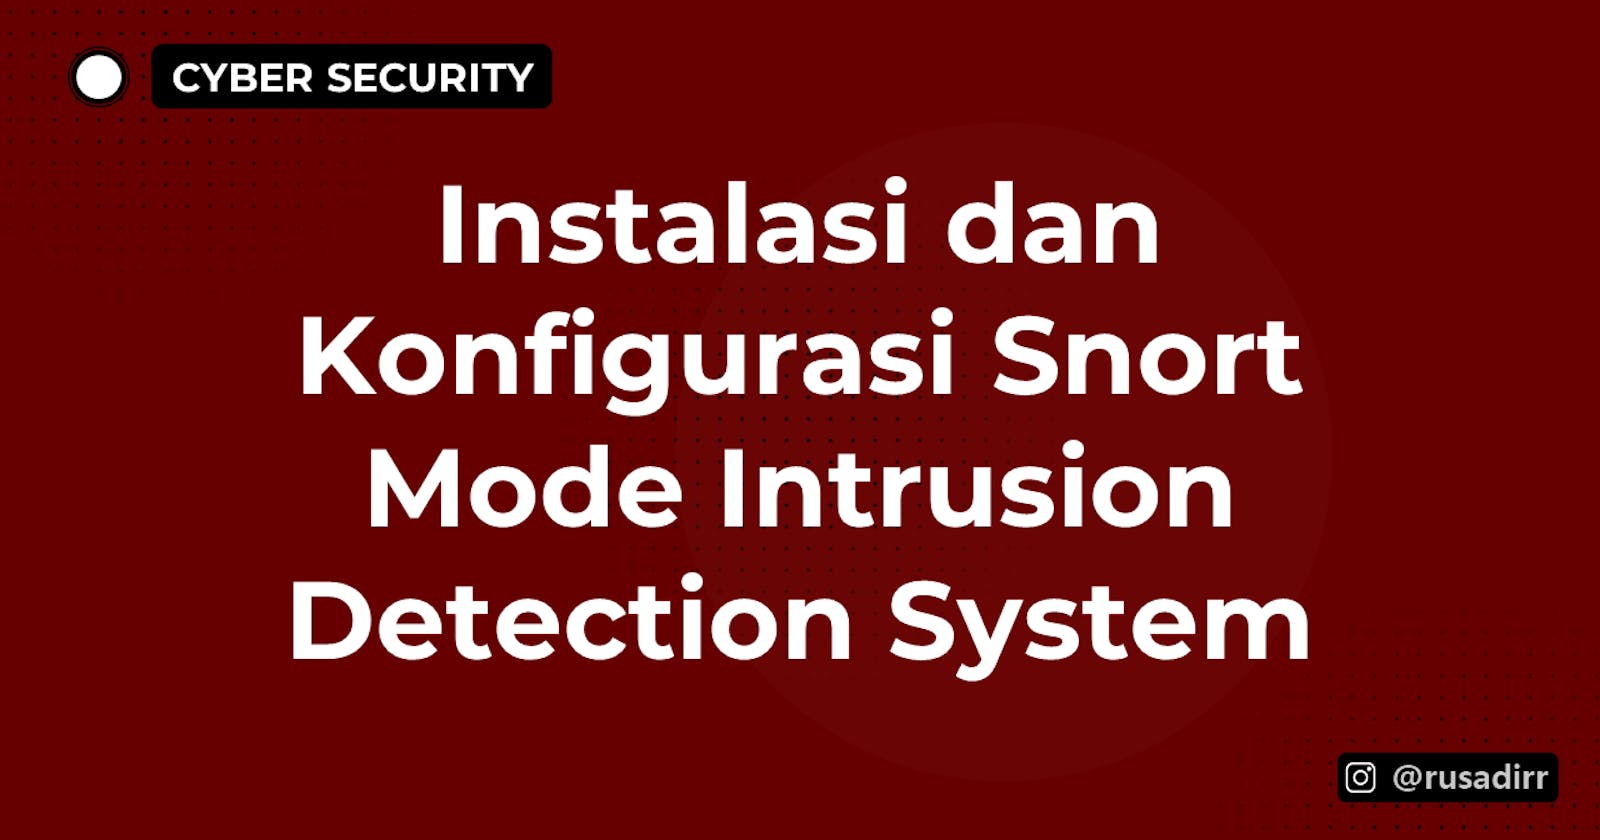 Instalasi dan Konfigurasi Snort Mode Intrusion Detection System di Ubuntu Server 20.04